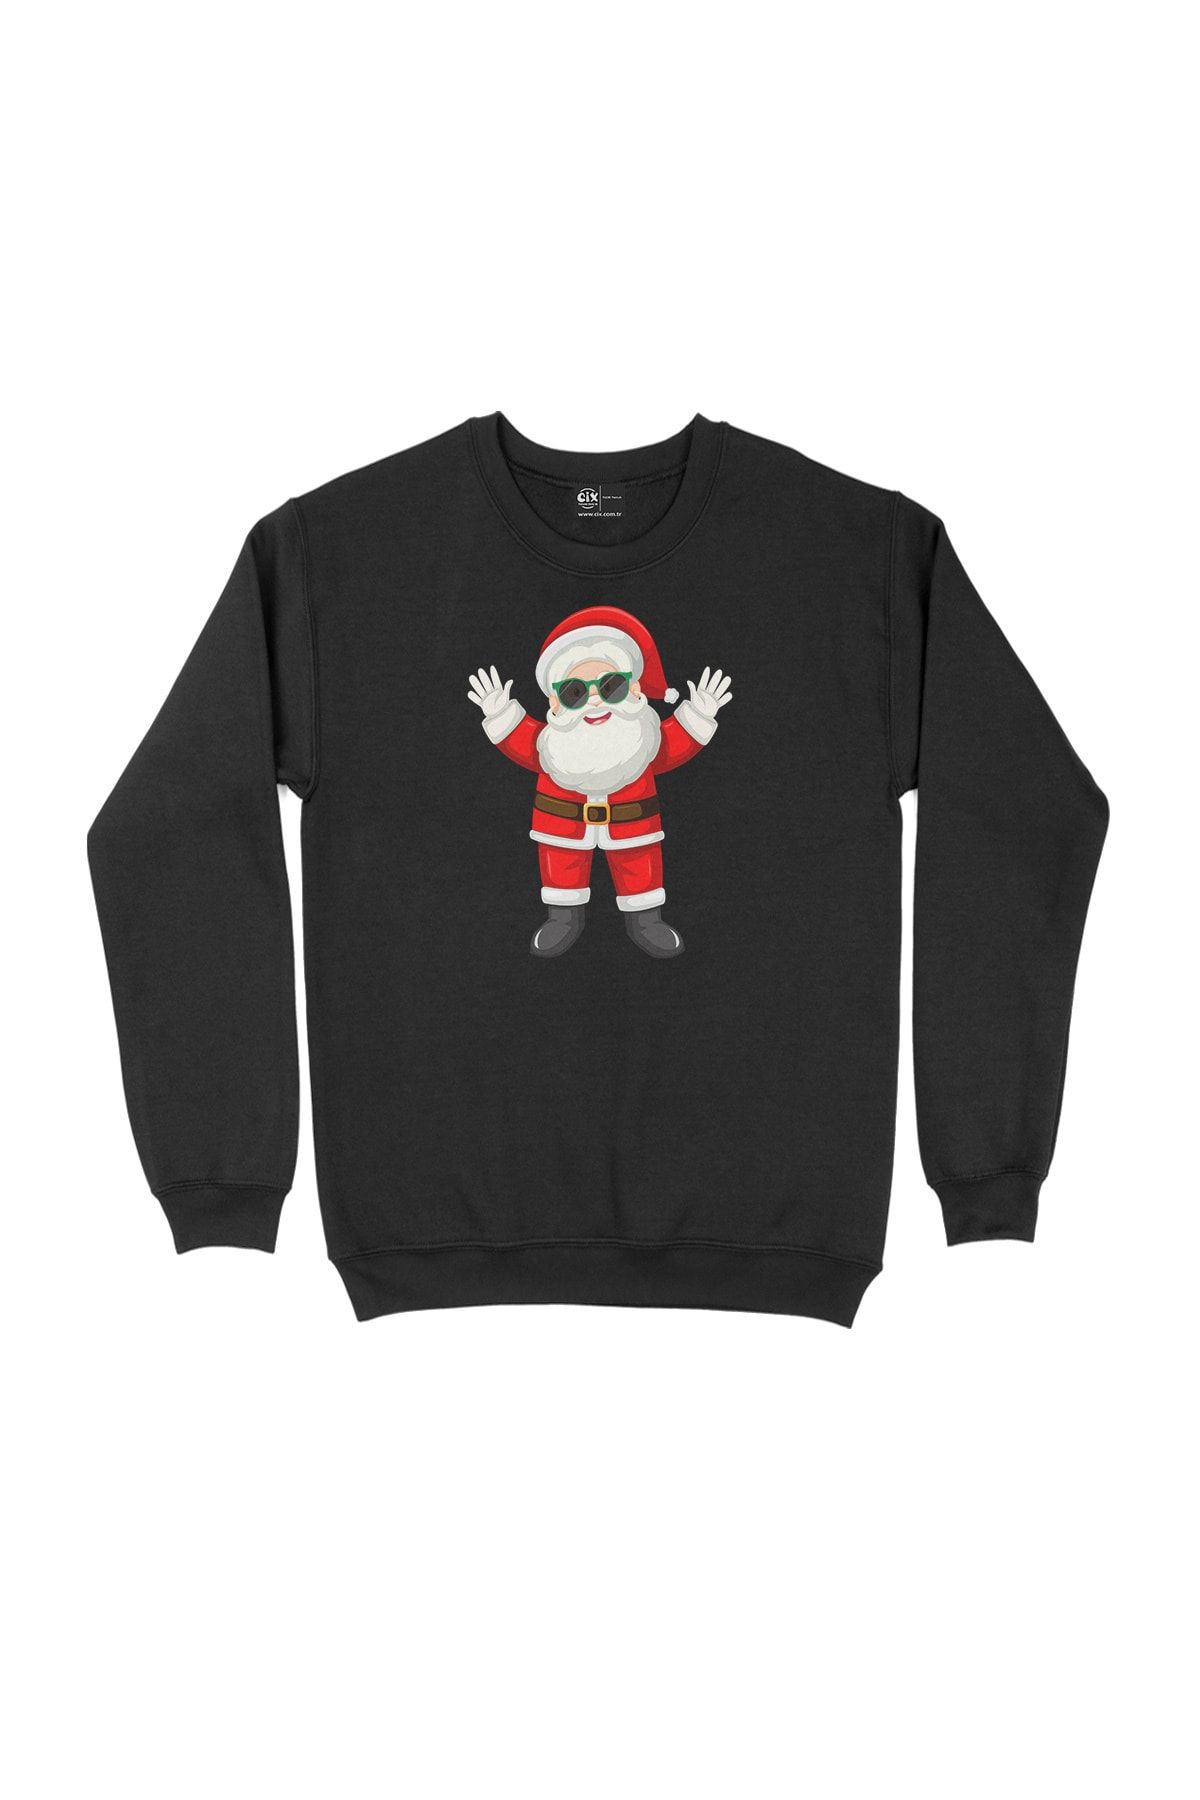 Cix Mutlu Santa Claus Yılbaşı Sweatshirt